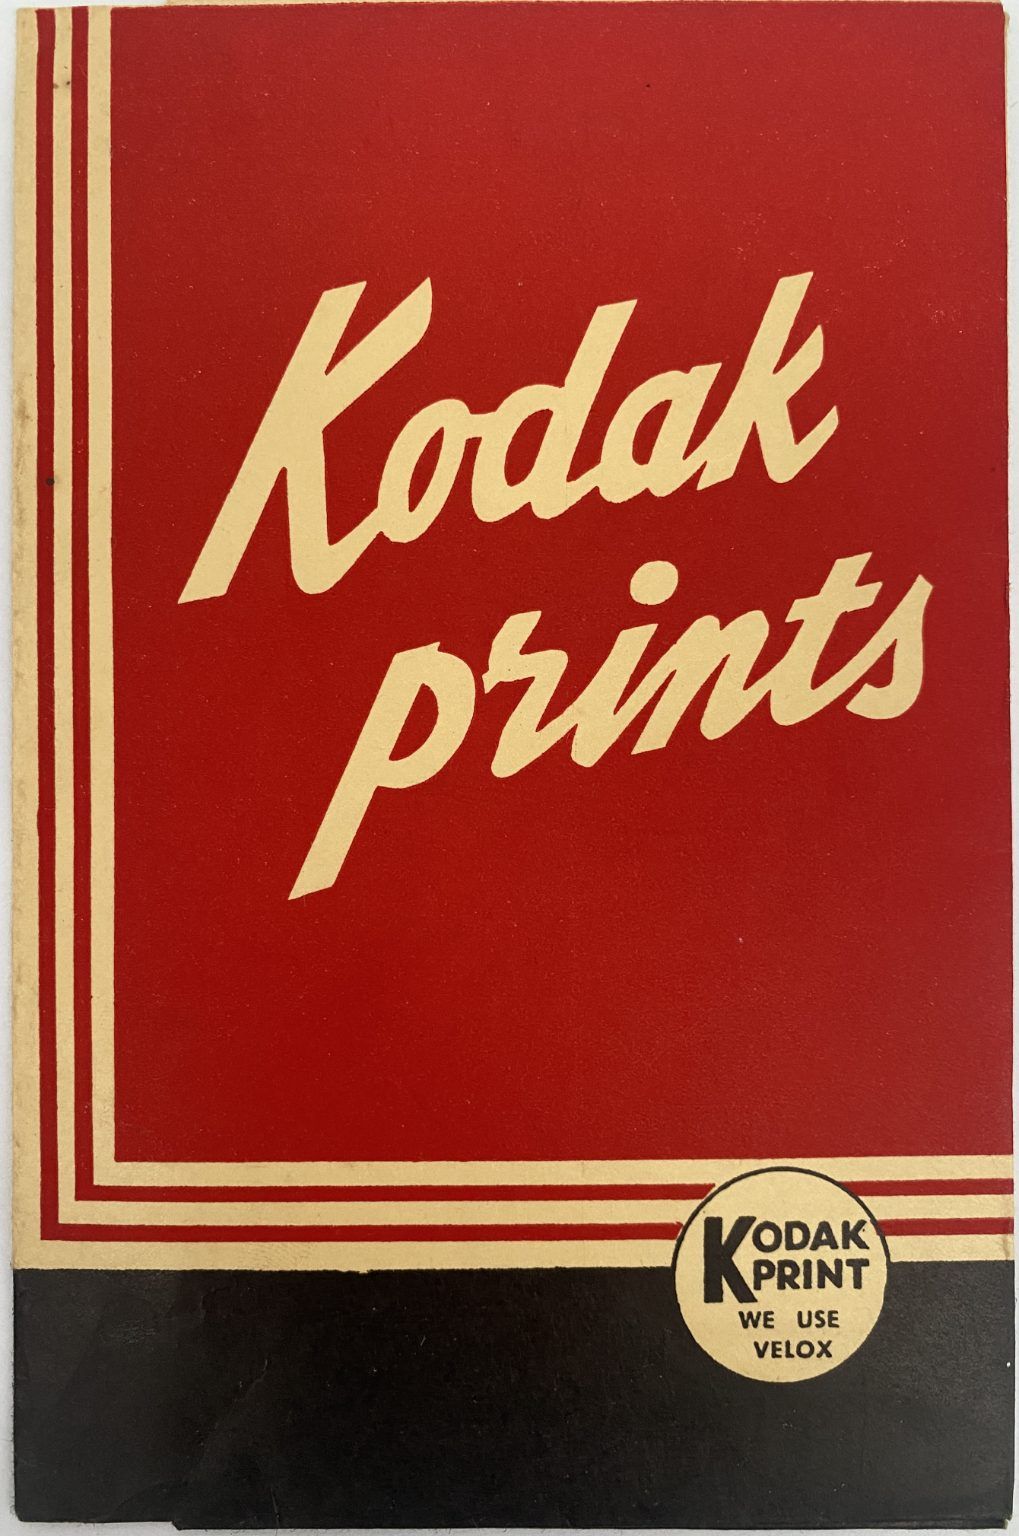 OLD PHOTO / NEGATIVE WALLET: Kodak Prints 1940s